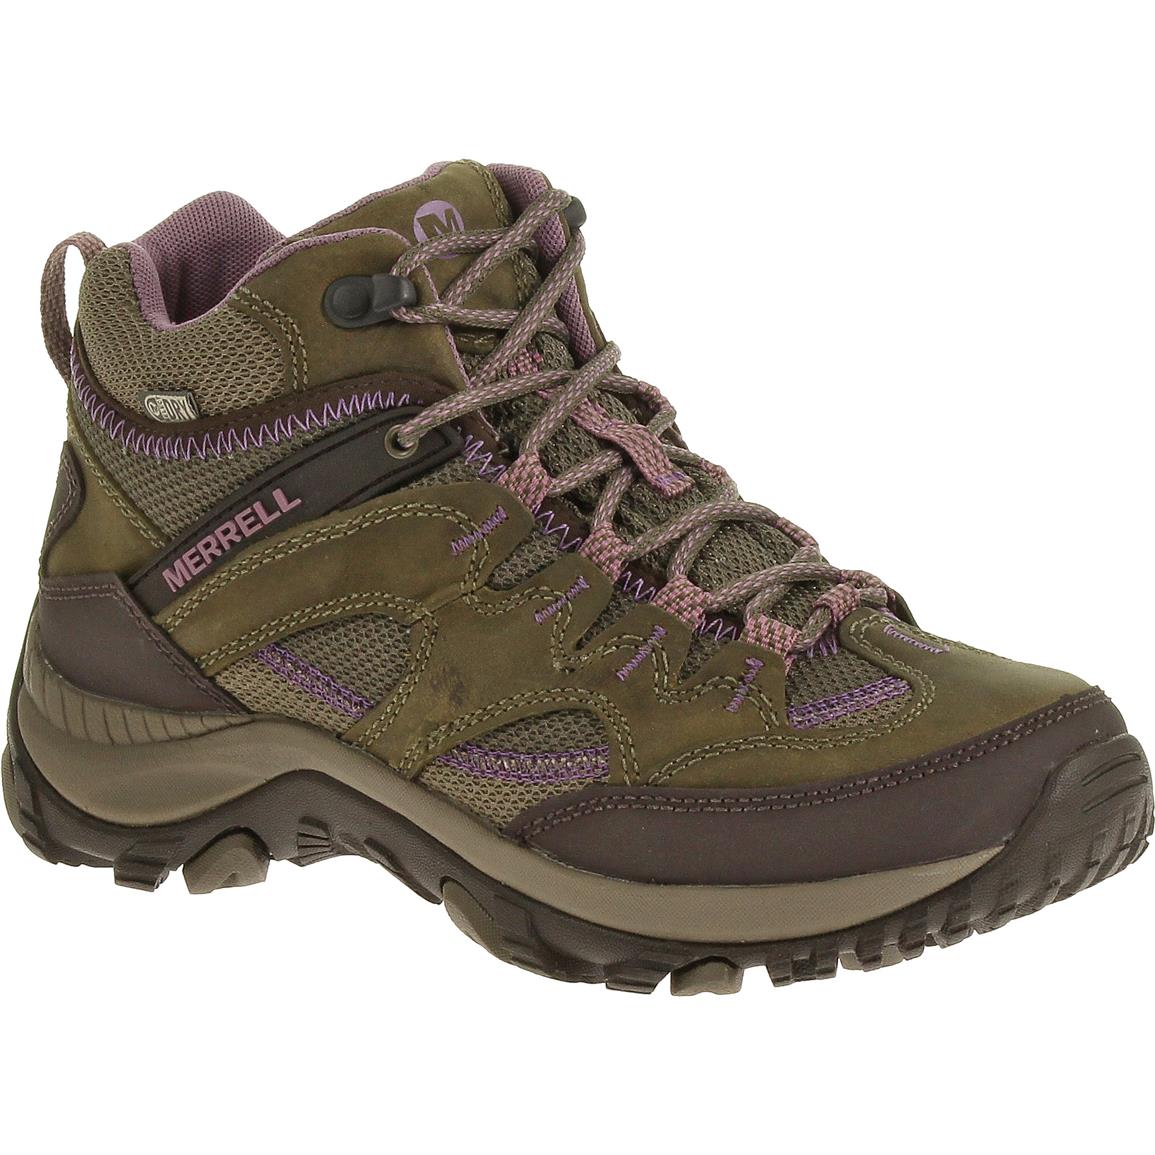 Women's Merrell Salida Hiking Boots, Waterproof, Mid, Brindle - 654151 ...